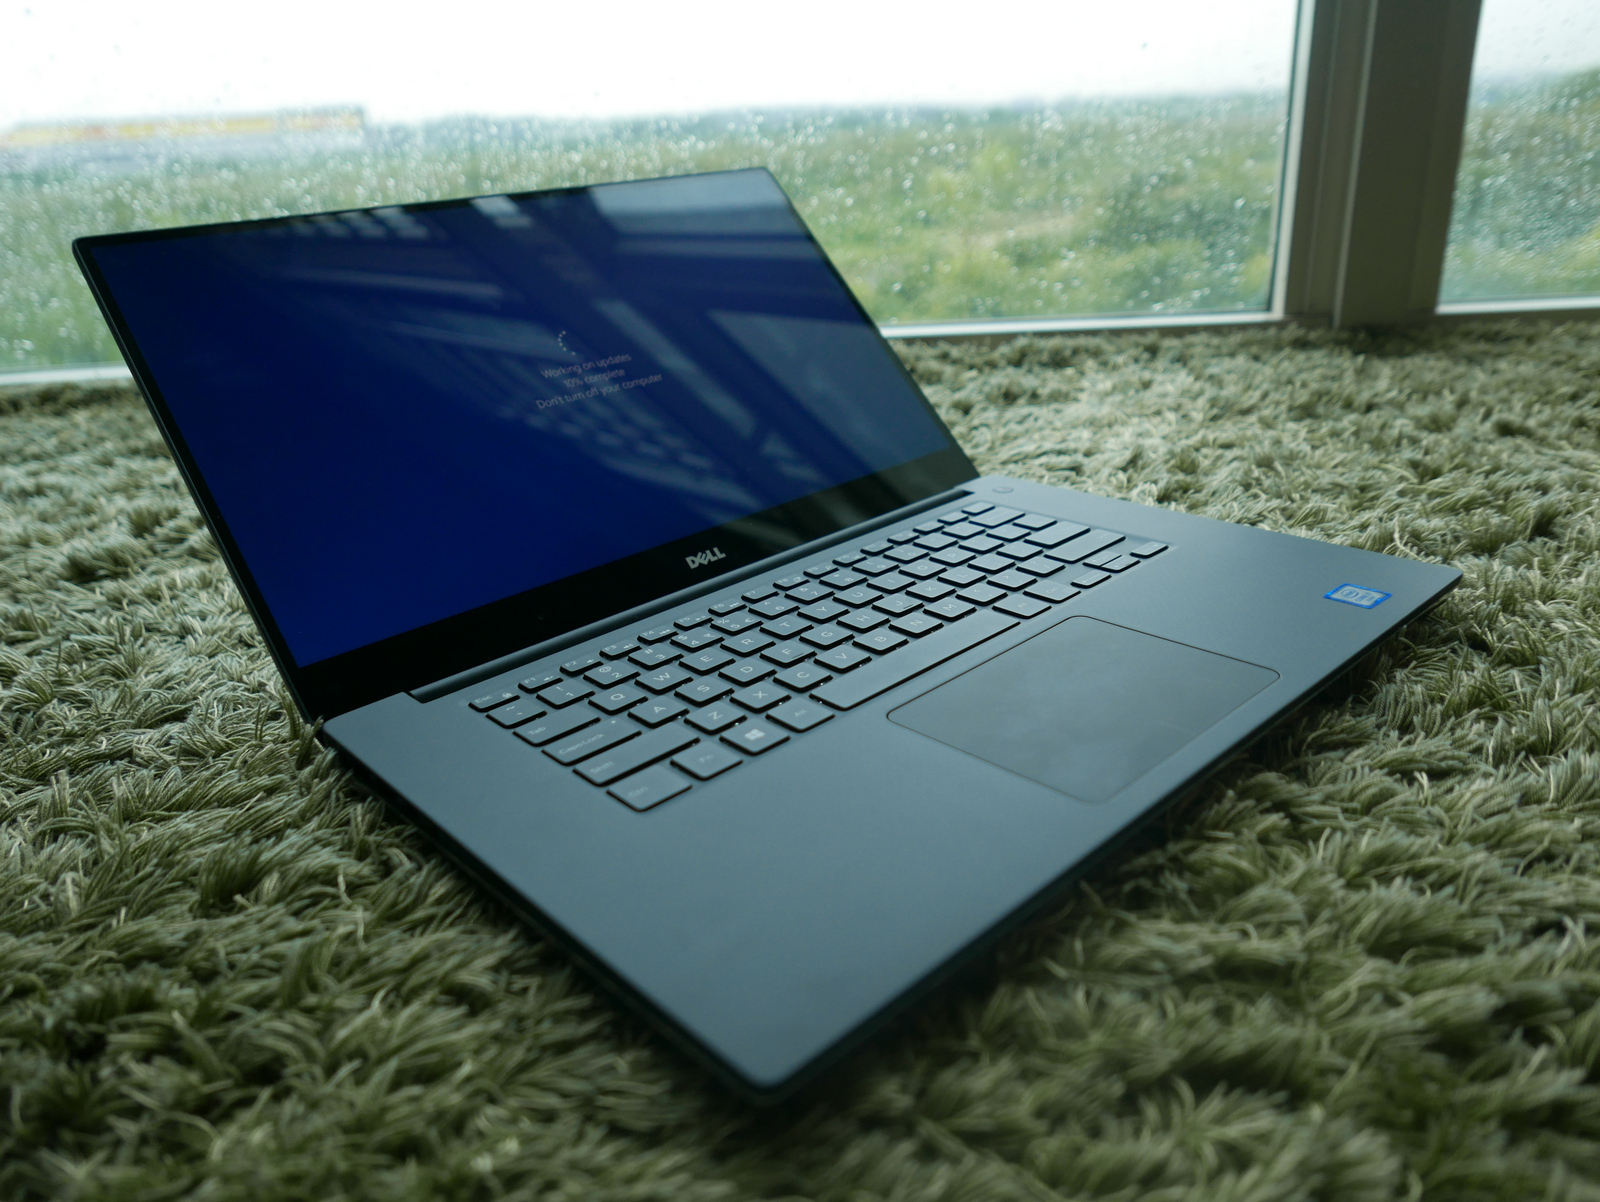 Goondu review: Dell XPS 15 laptop - Techgoondu